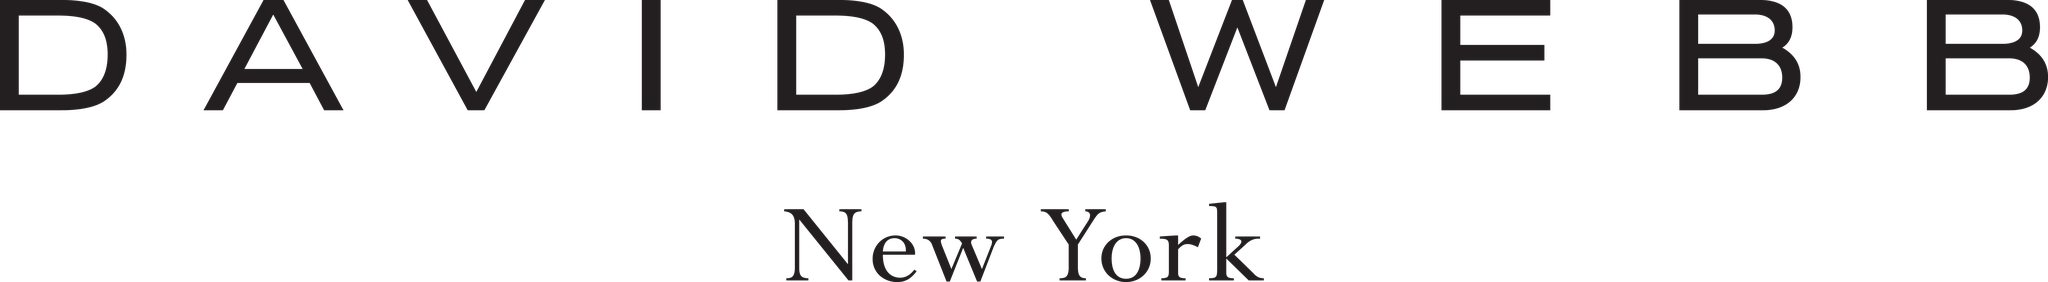 david webb logo